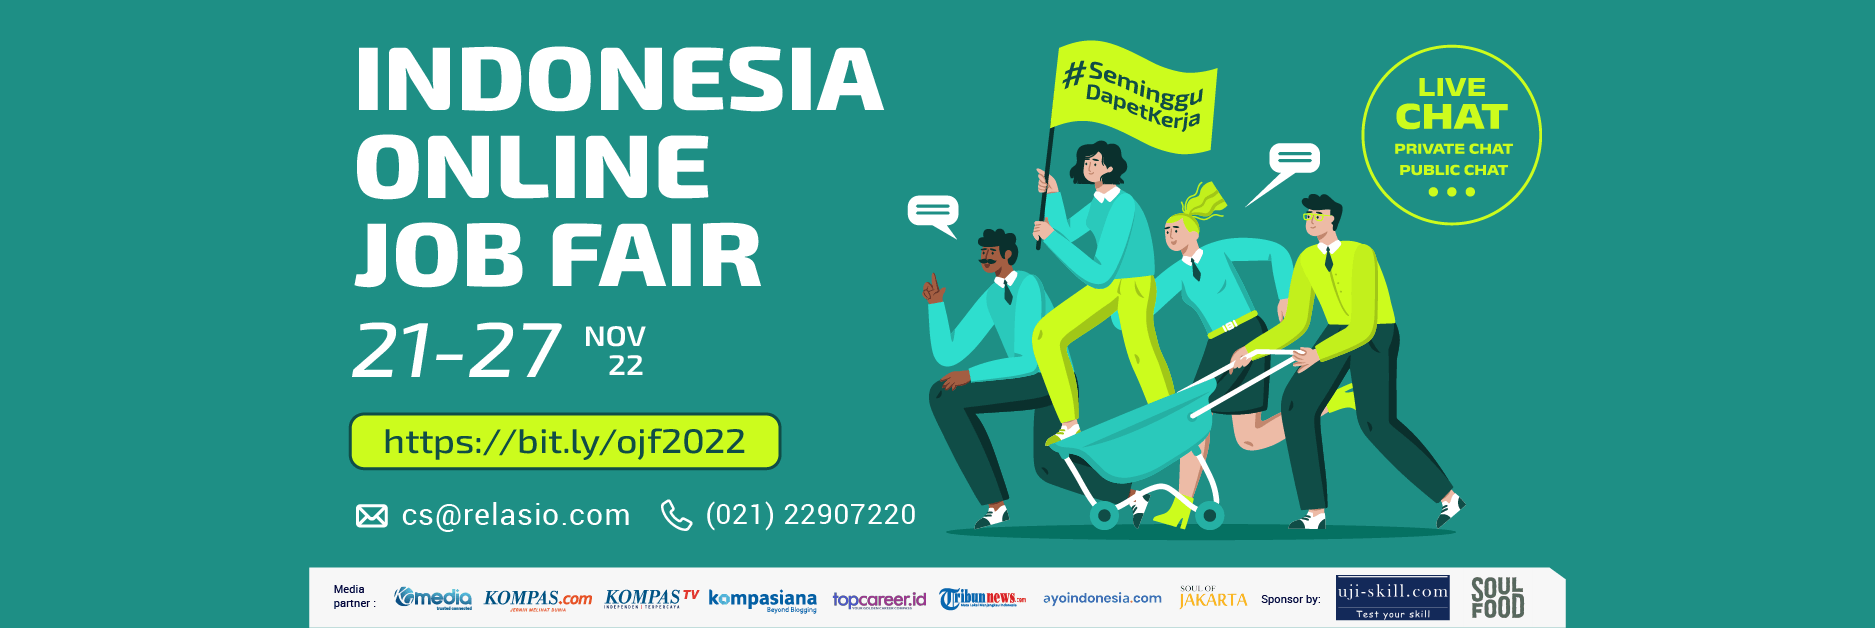 Indonesia Career Expo Job Fair Online 21 - 27 November 2022